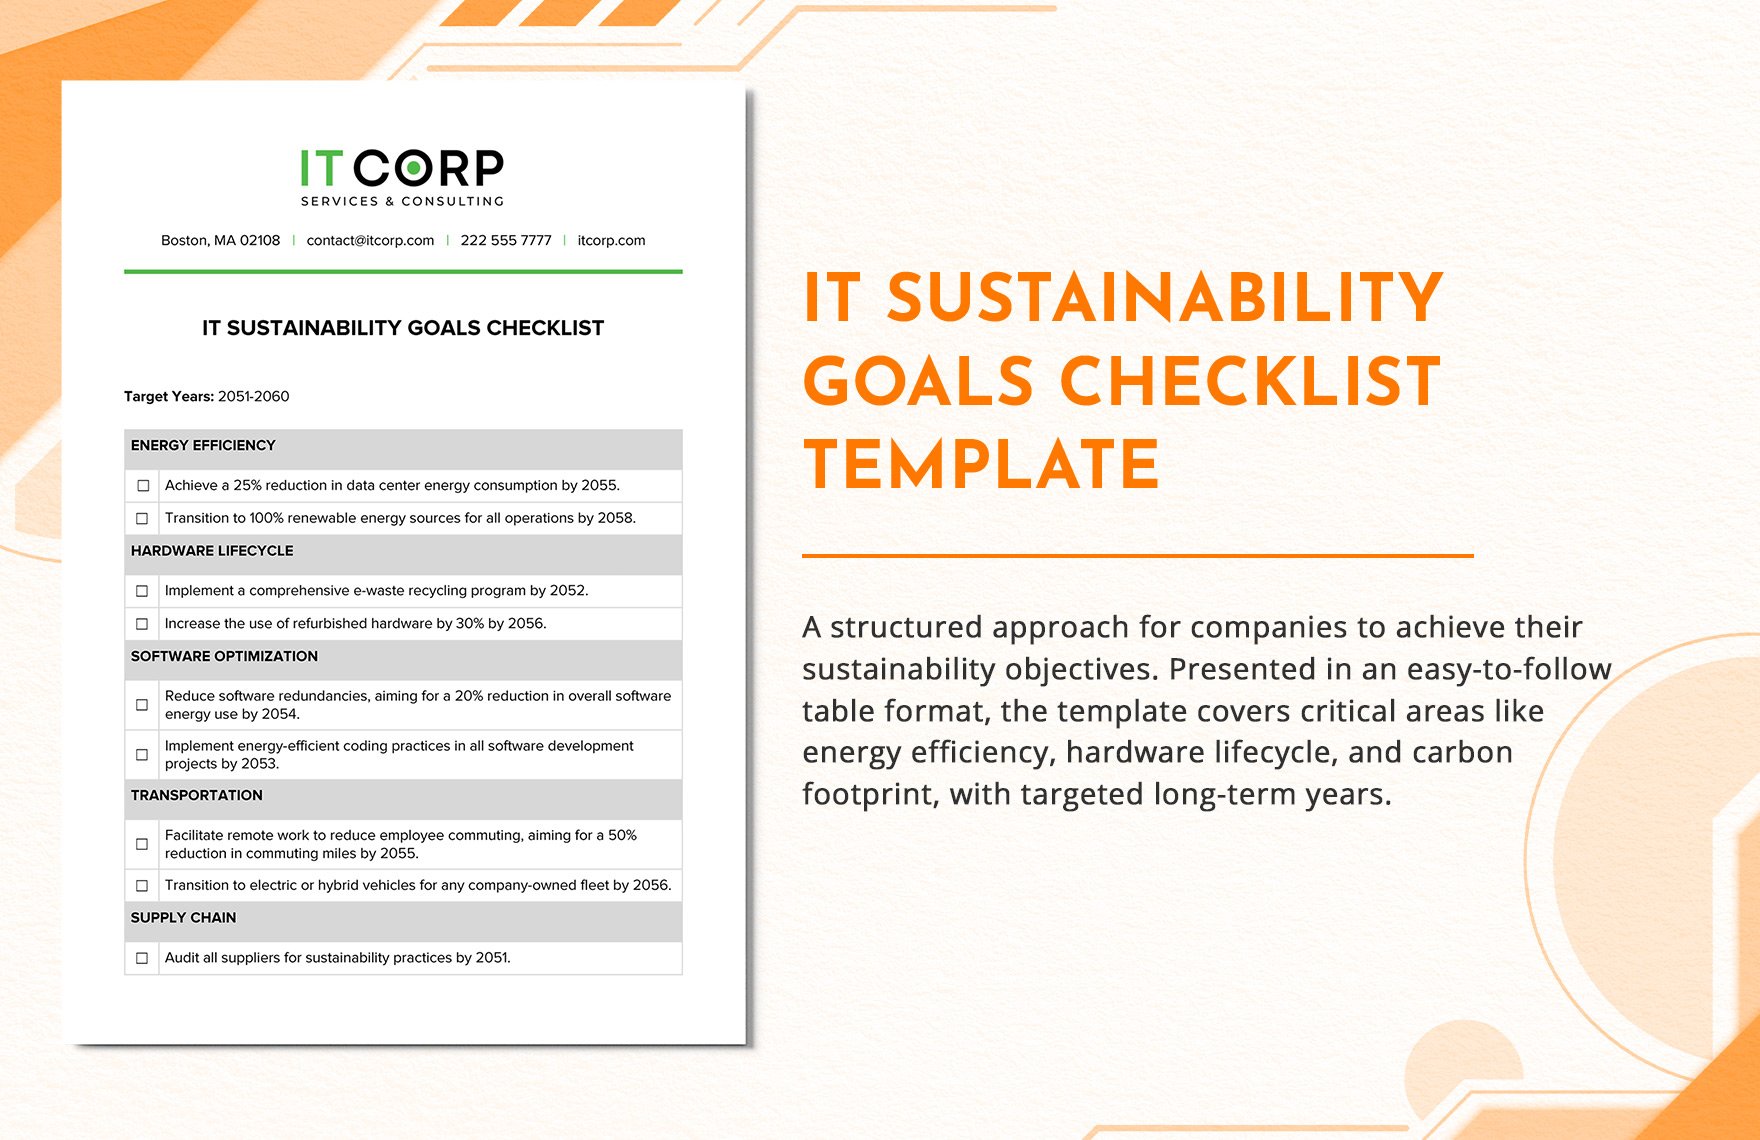 IT Sustainability Goals Checklist Template